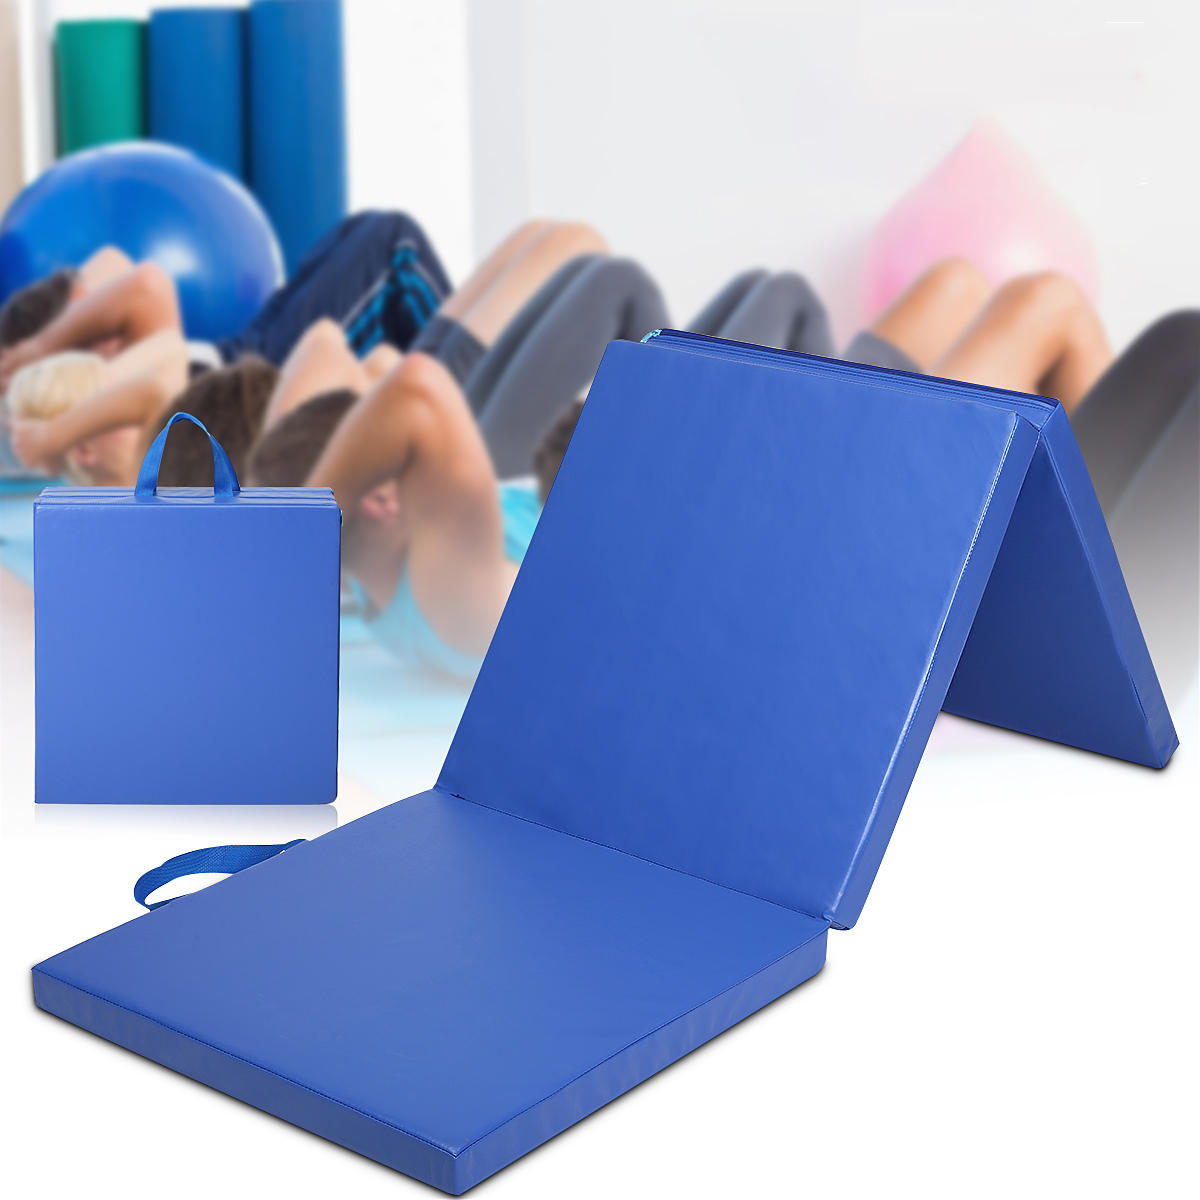 70×23×2 pouces 3 Plis Tapis de Gymnastique Yoga Exercice Gym Portable Panneau Airtrack Escalade Pilates Coussin